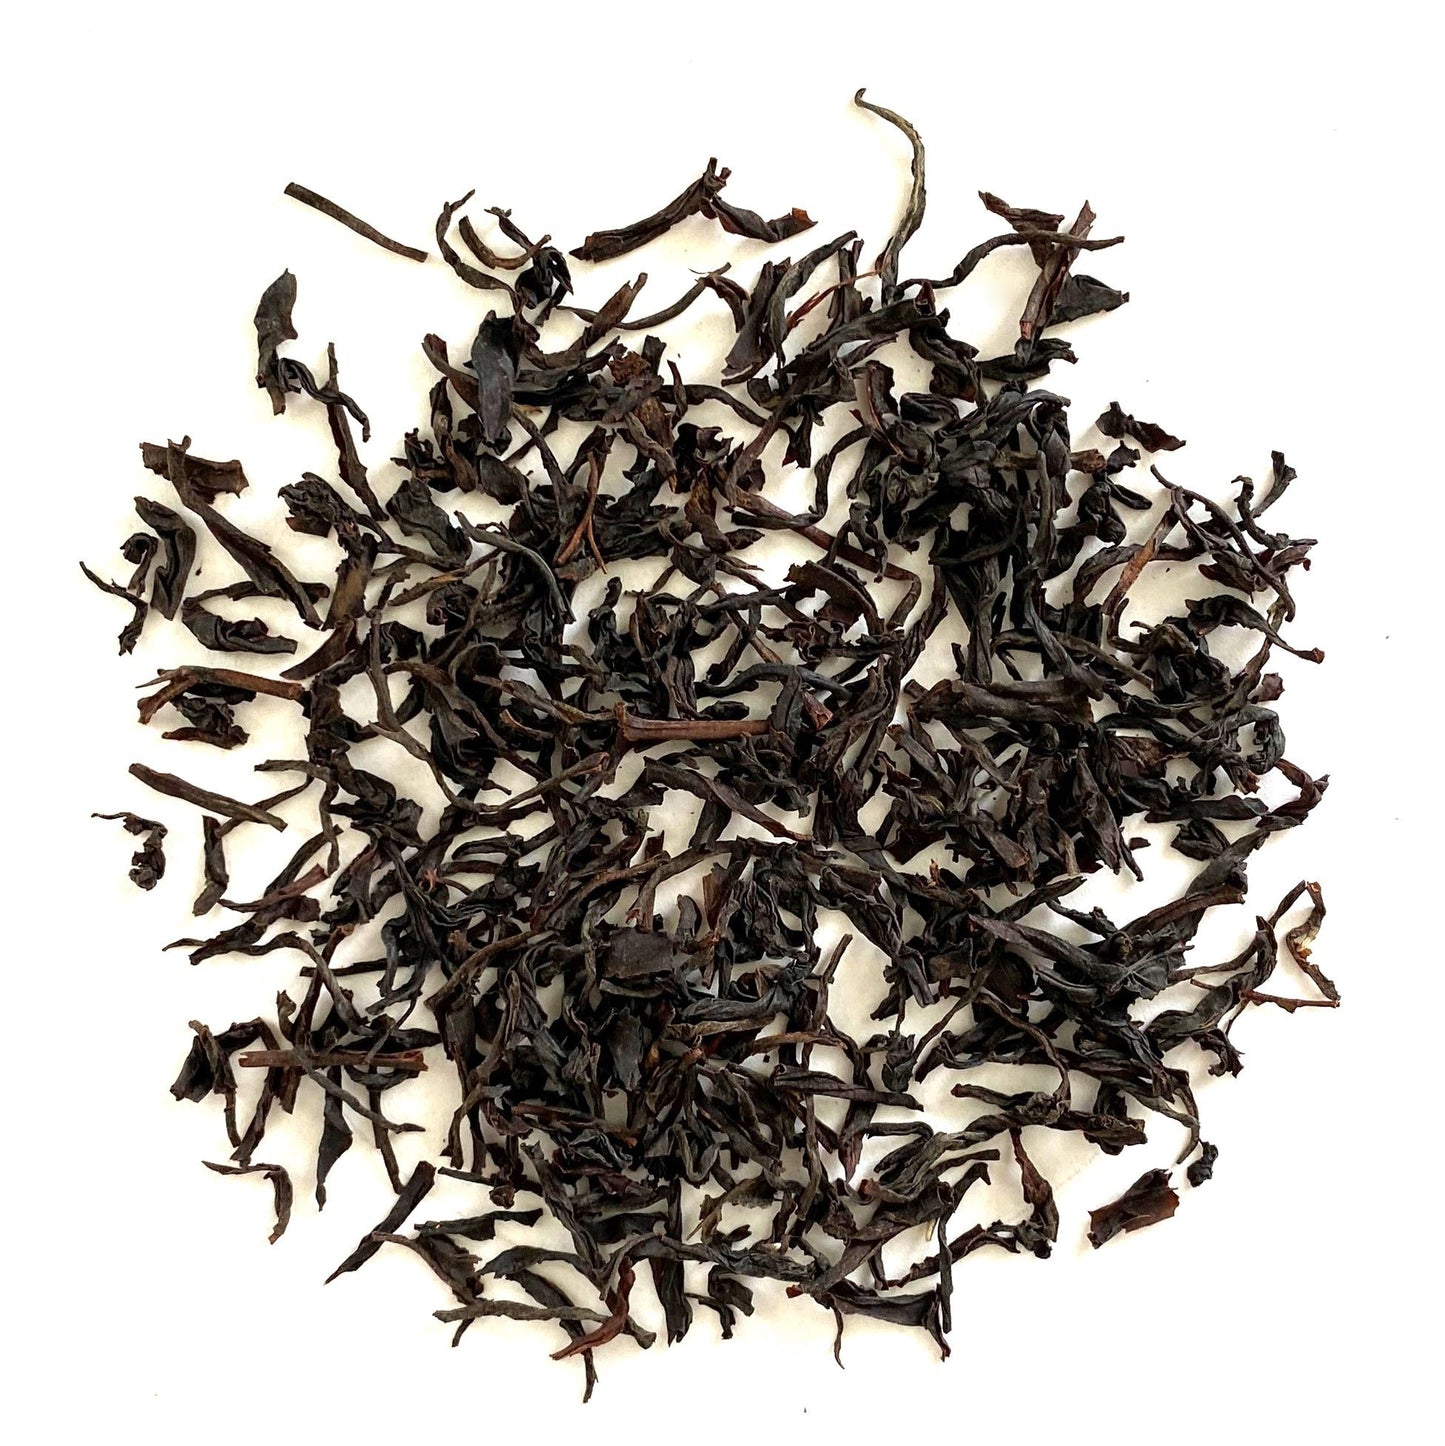 Black tea from Corsley Estate in the Nilgiri region, India